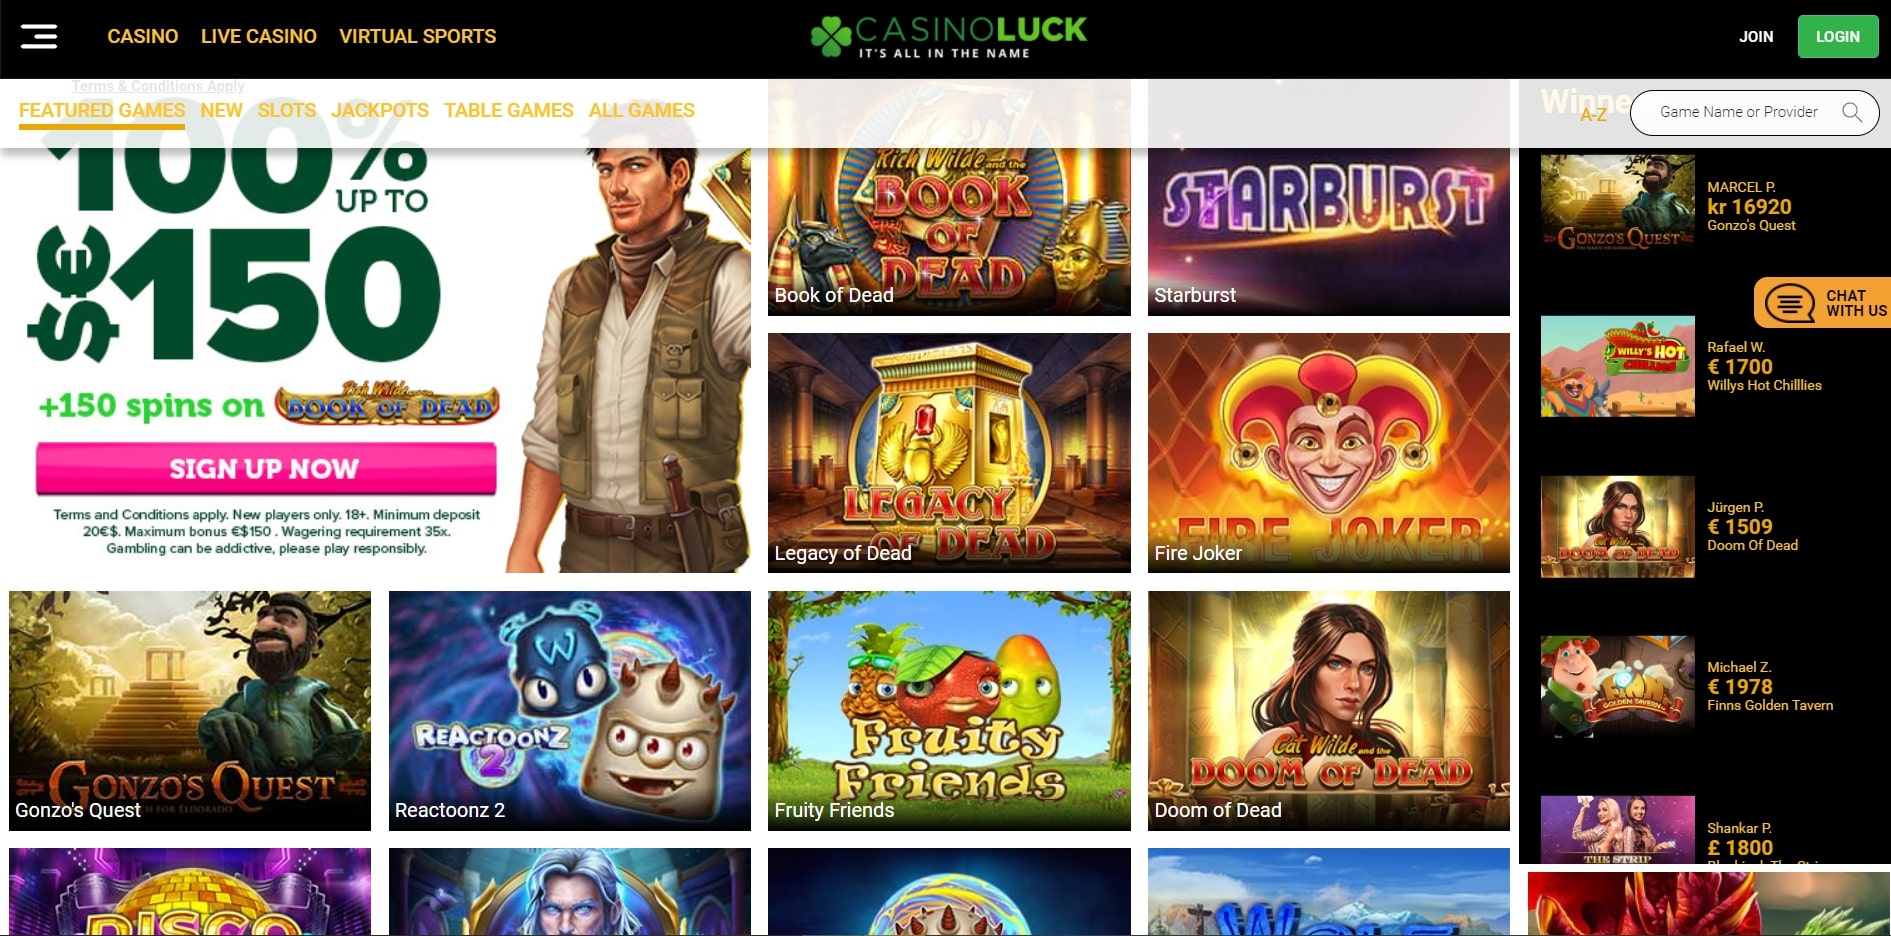 CasinoLuck Games